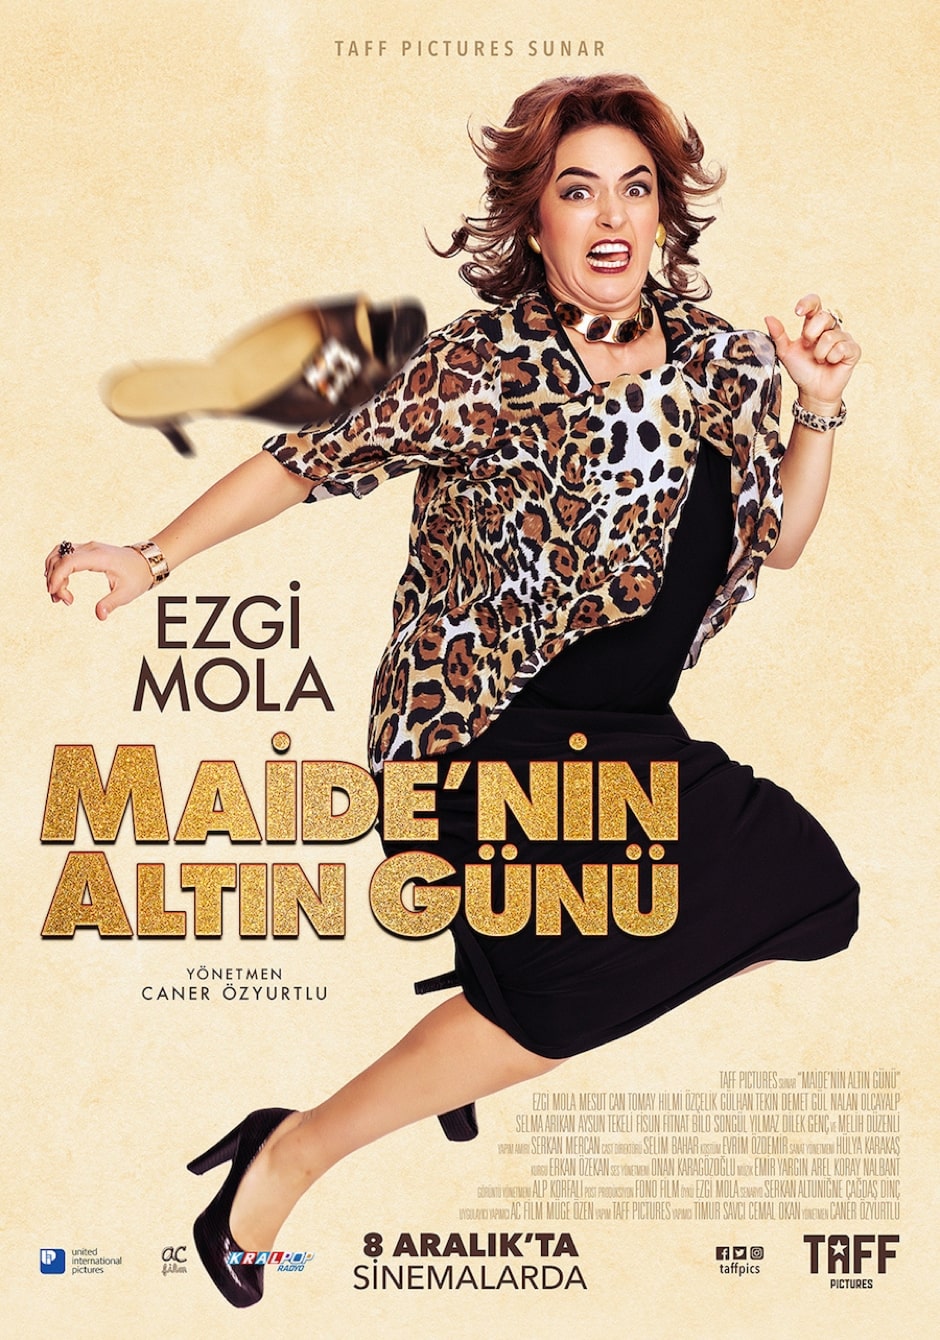 Maidenin_Altın_Gunu_Poster Copy 2-min